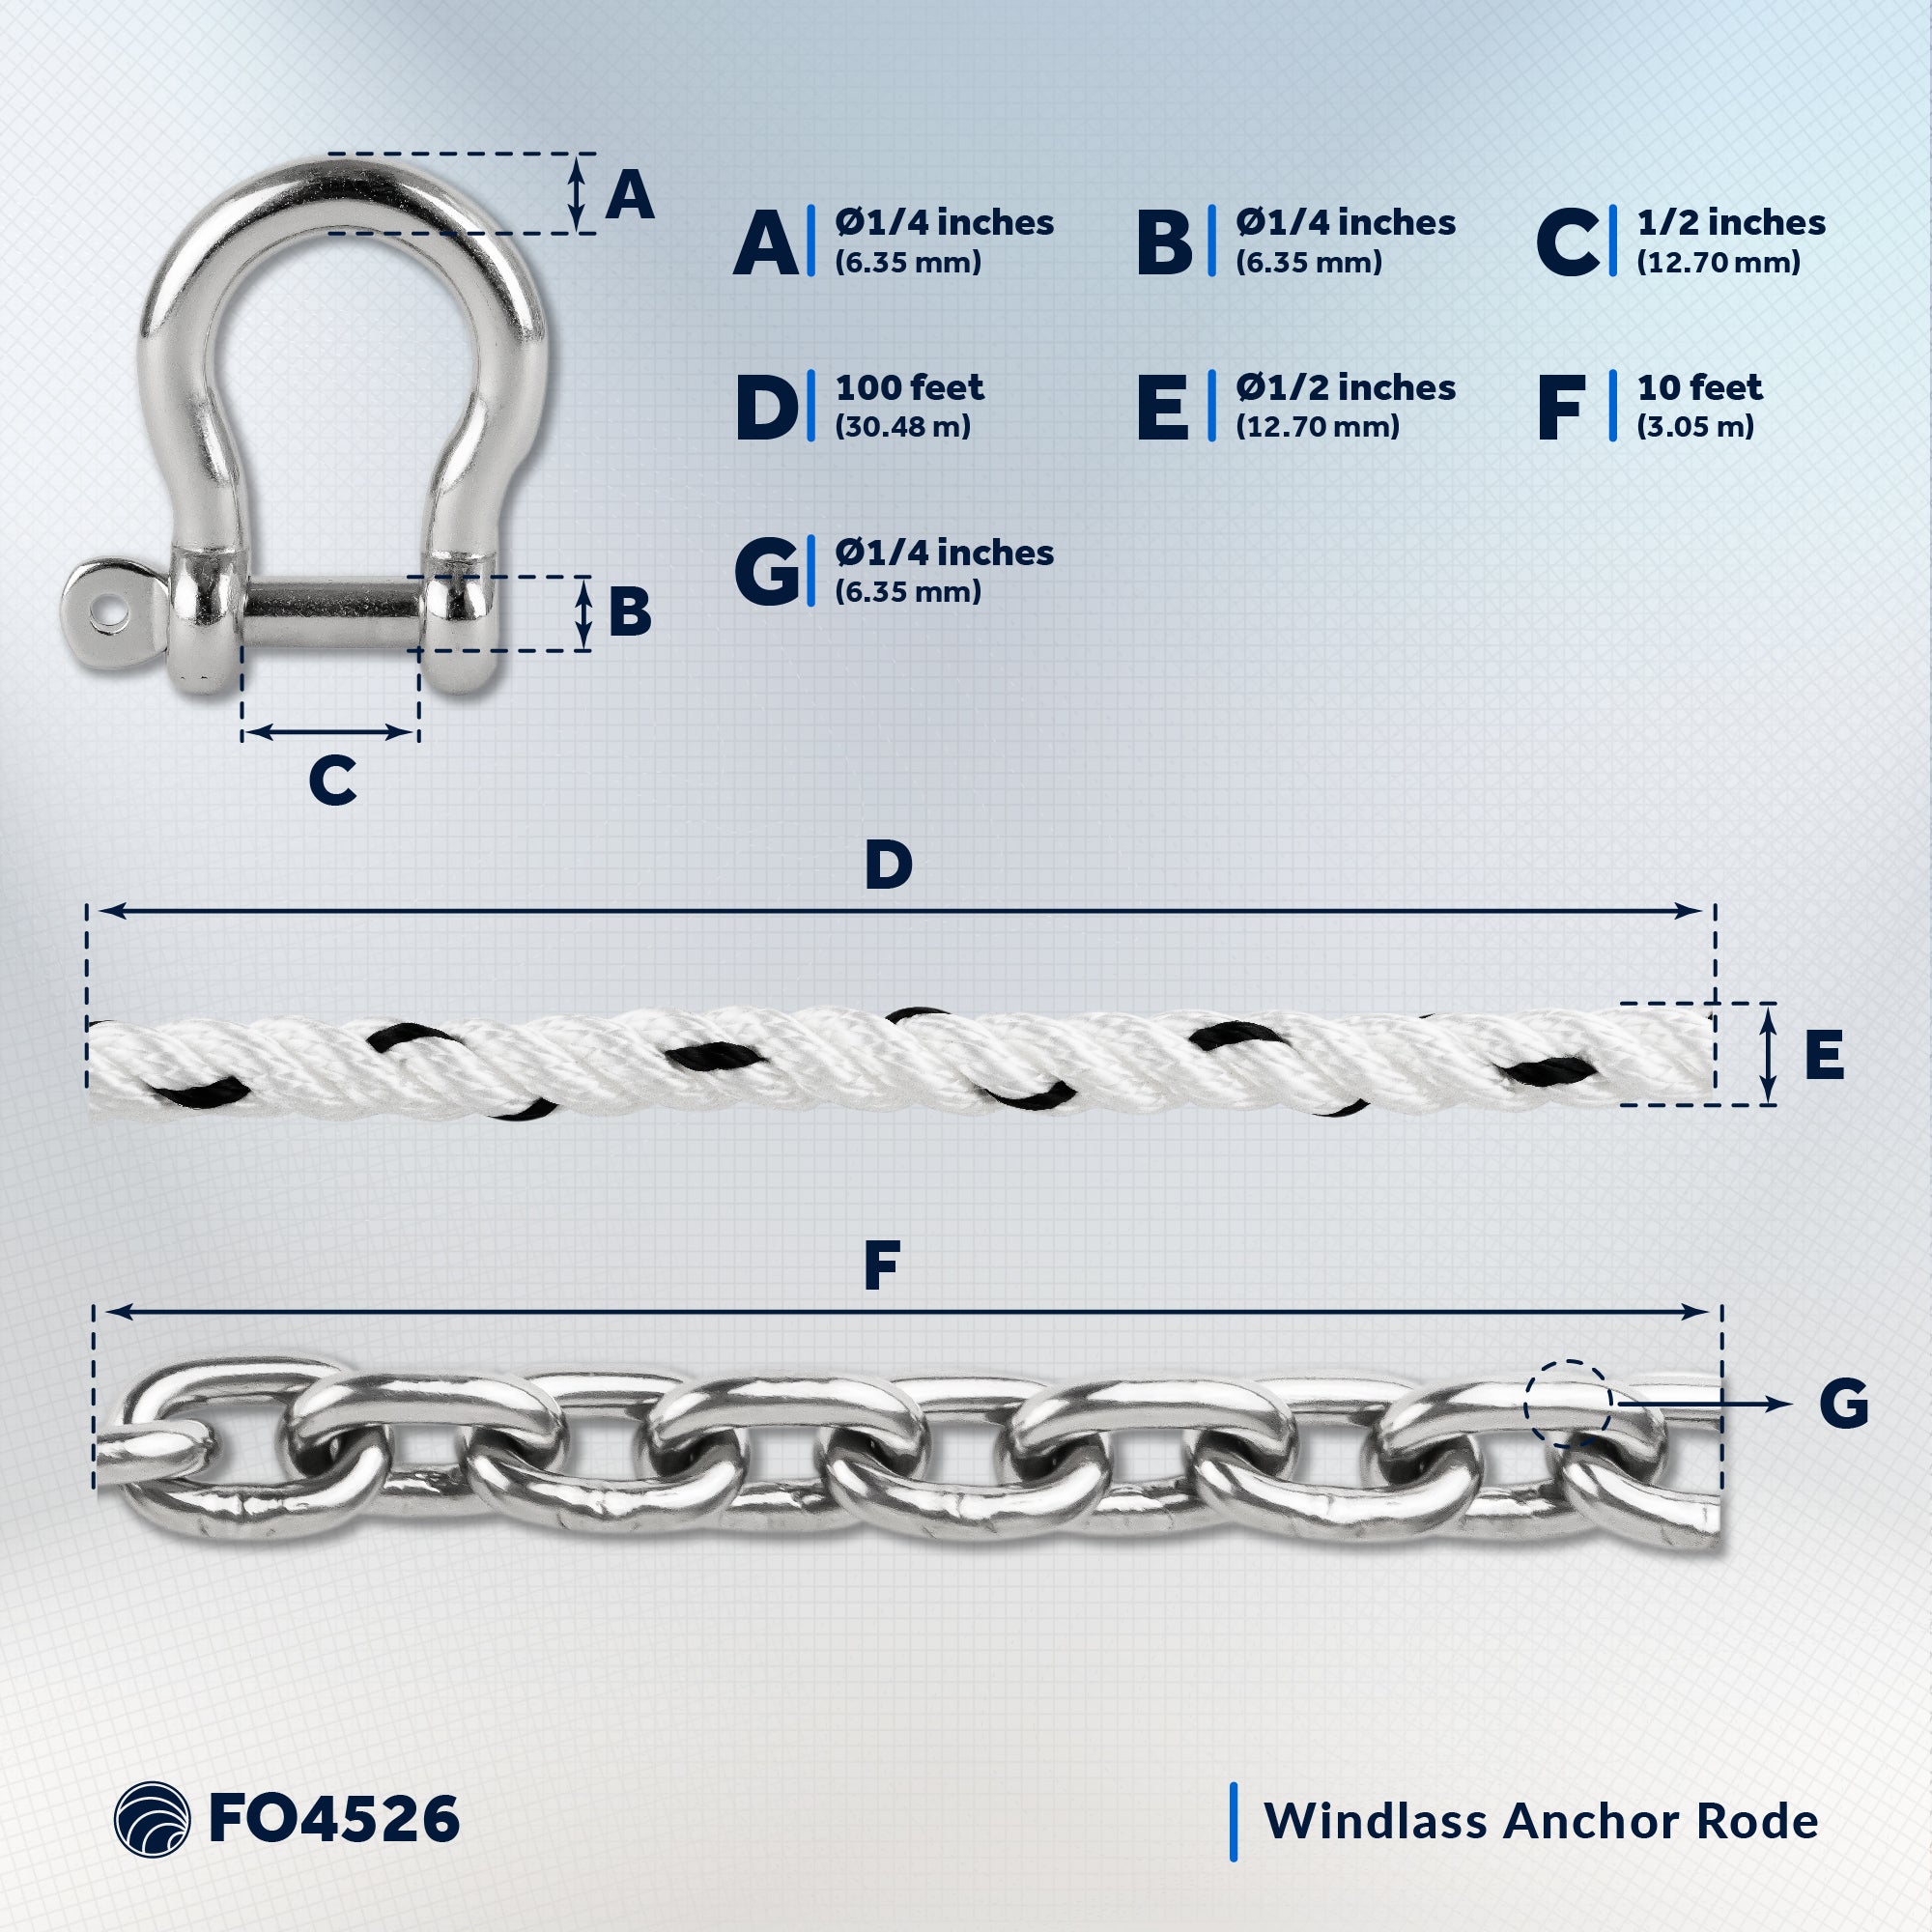 Windlass Anchor Rode, 1/2" x 100' Nylon 3-Strand Rope, 1/4 x 10' G4 Stainless Steel Chain - FO4526